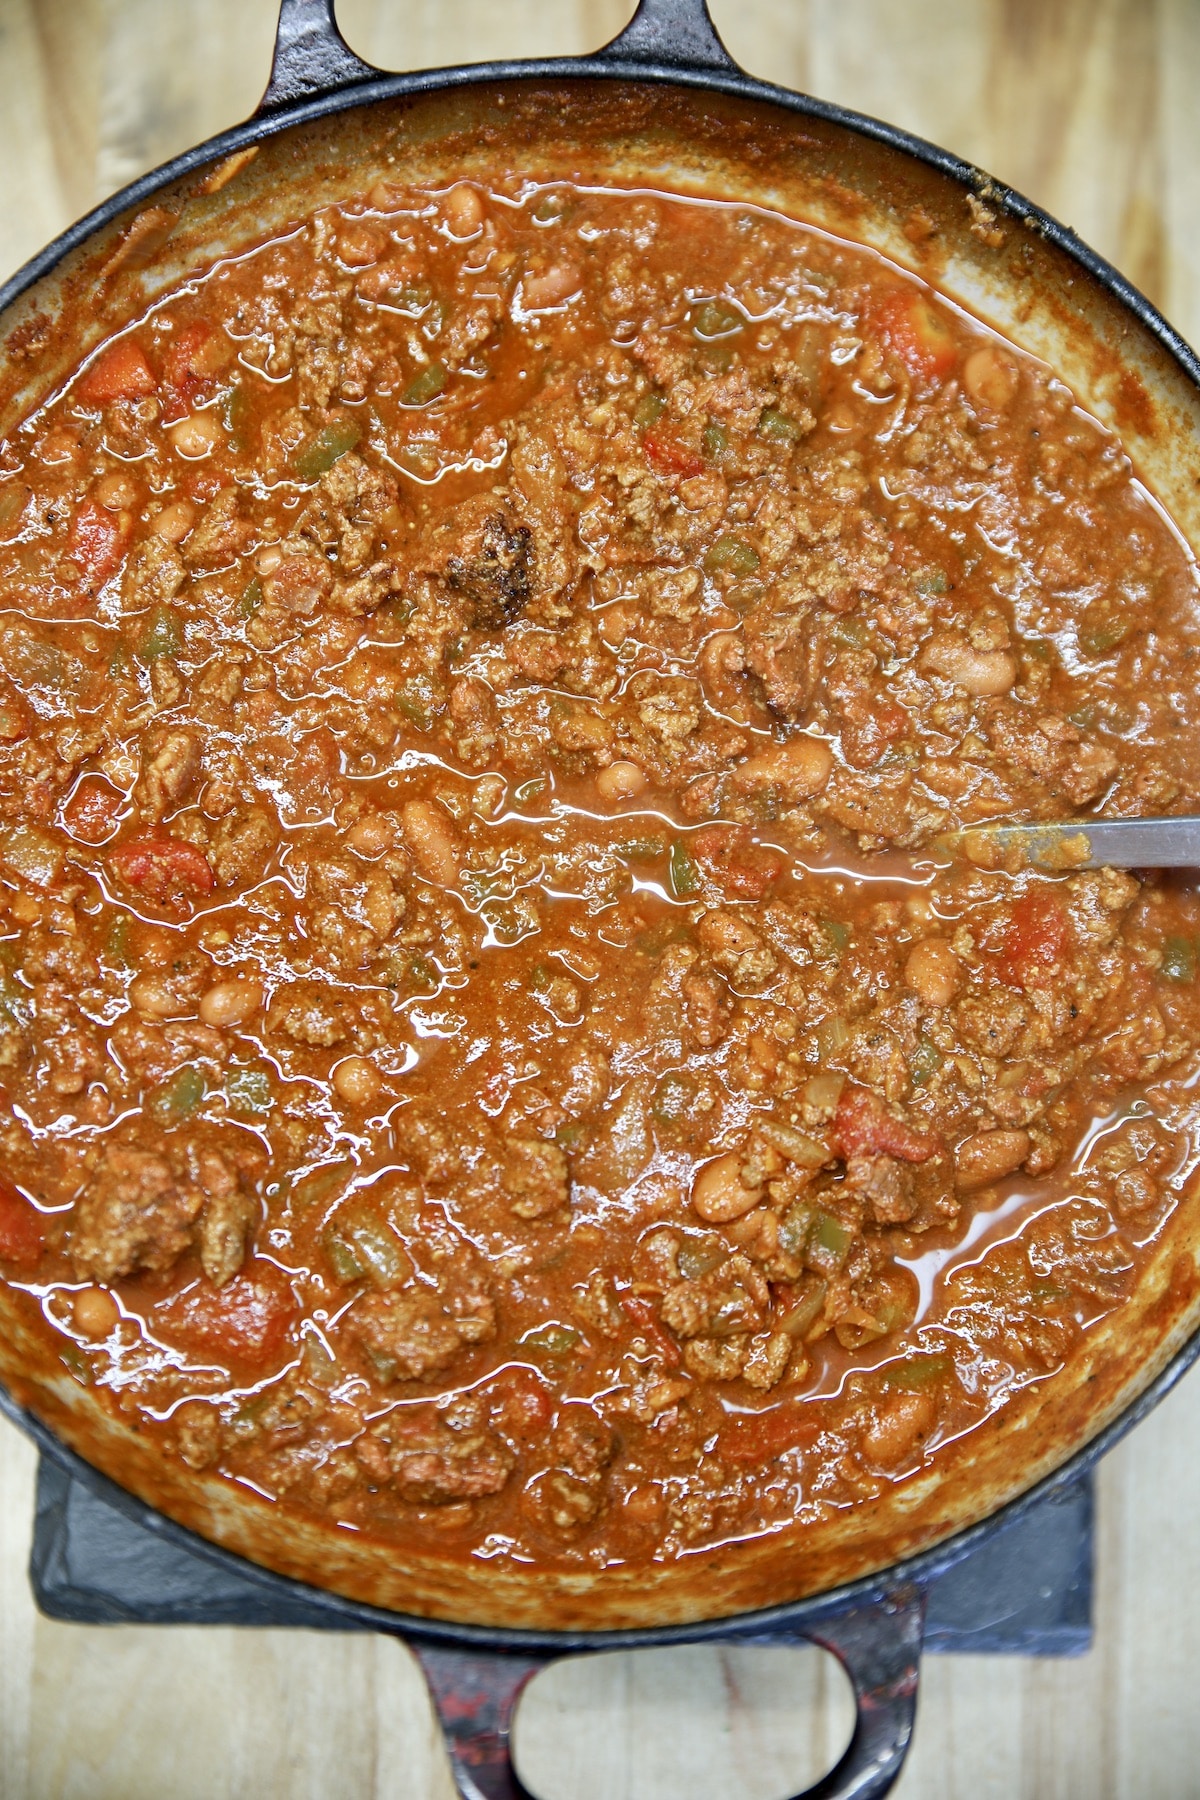 Pot of venison chili.